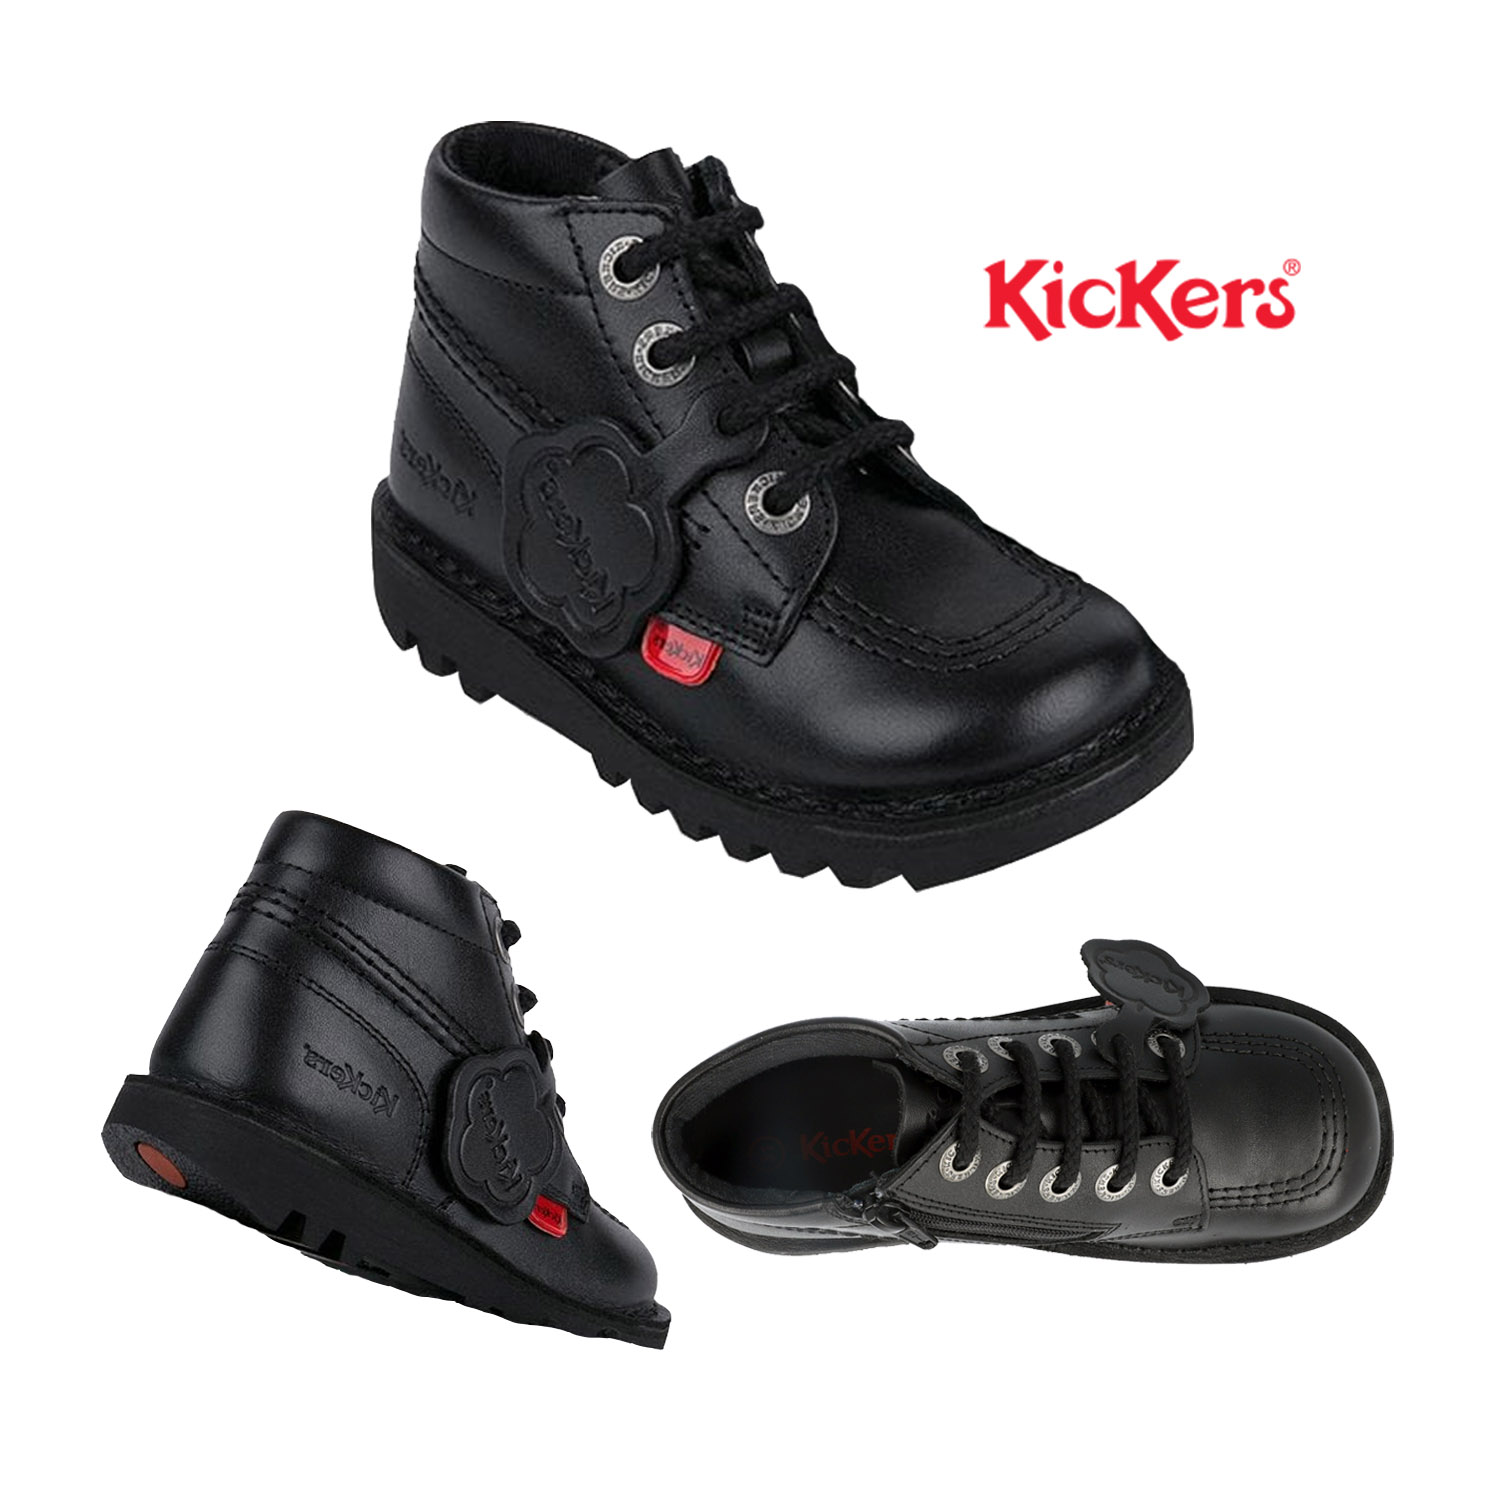 Kickers Juniors Kick Hi Lce Up Leather 